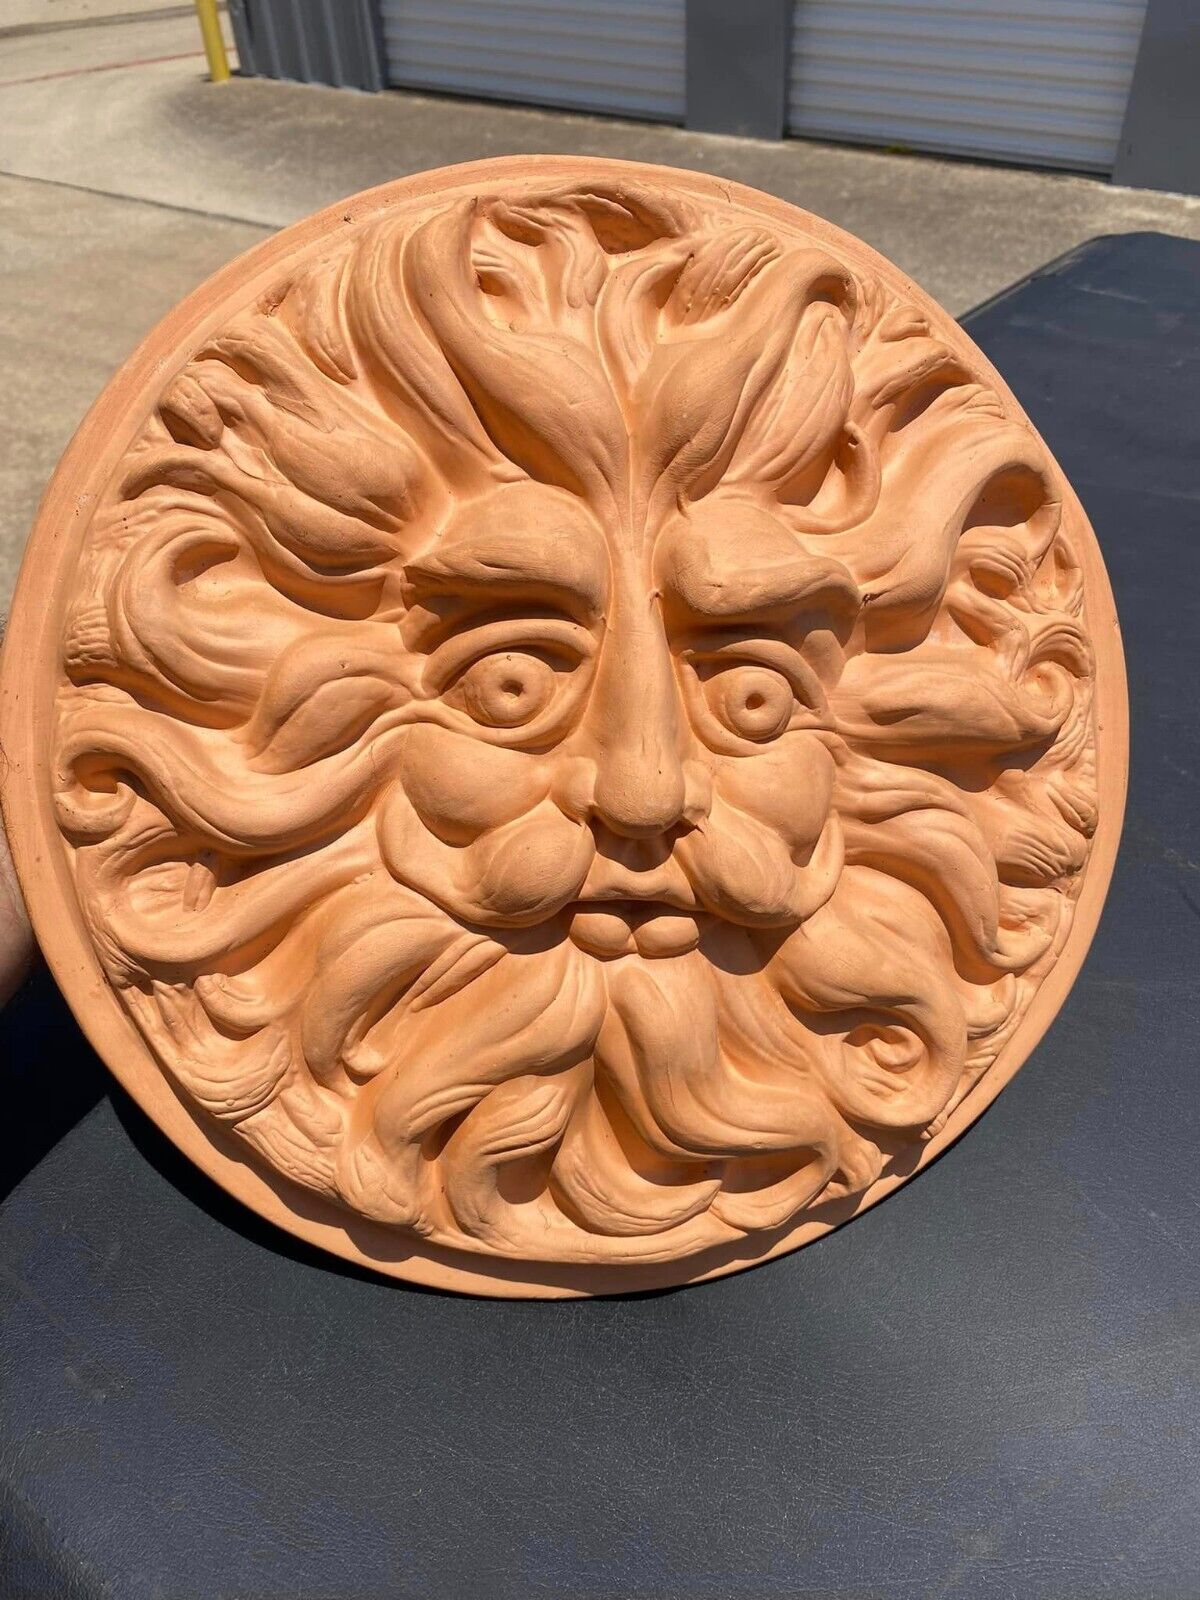 Bearded Face Ceramic Sculpture by Thomas Ceramics, Marshall, TX